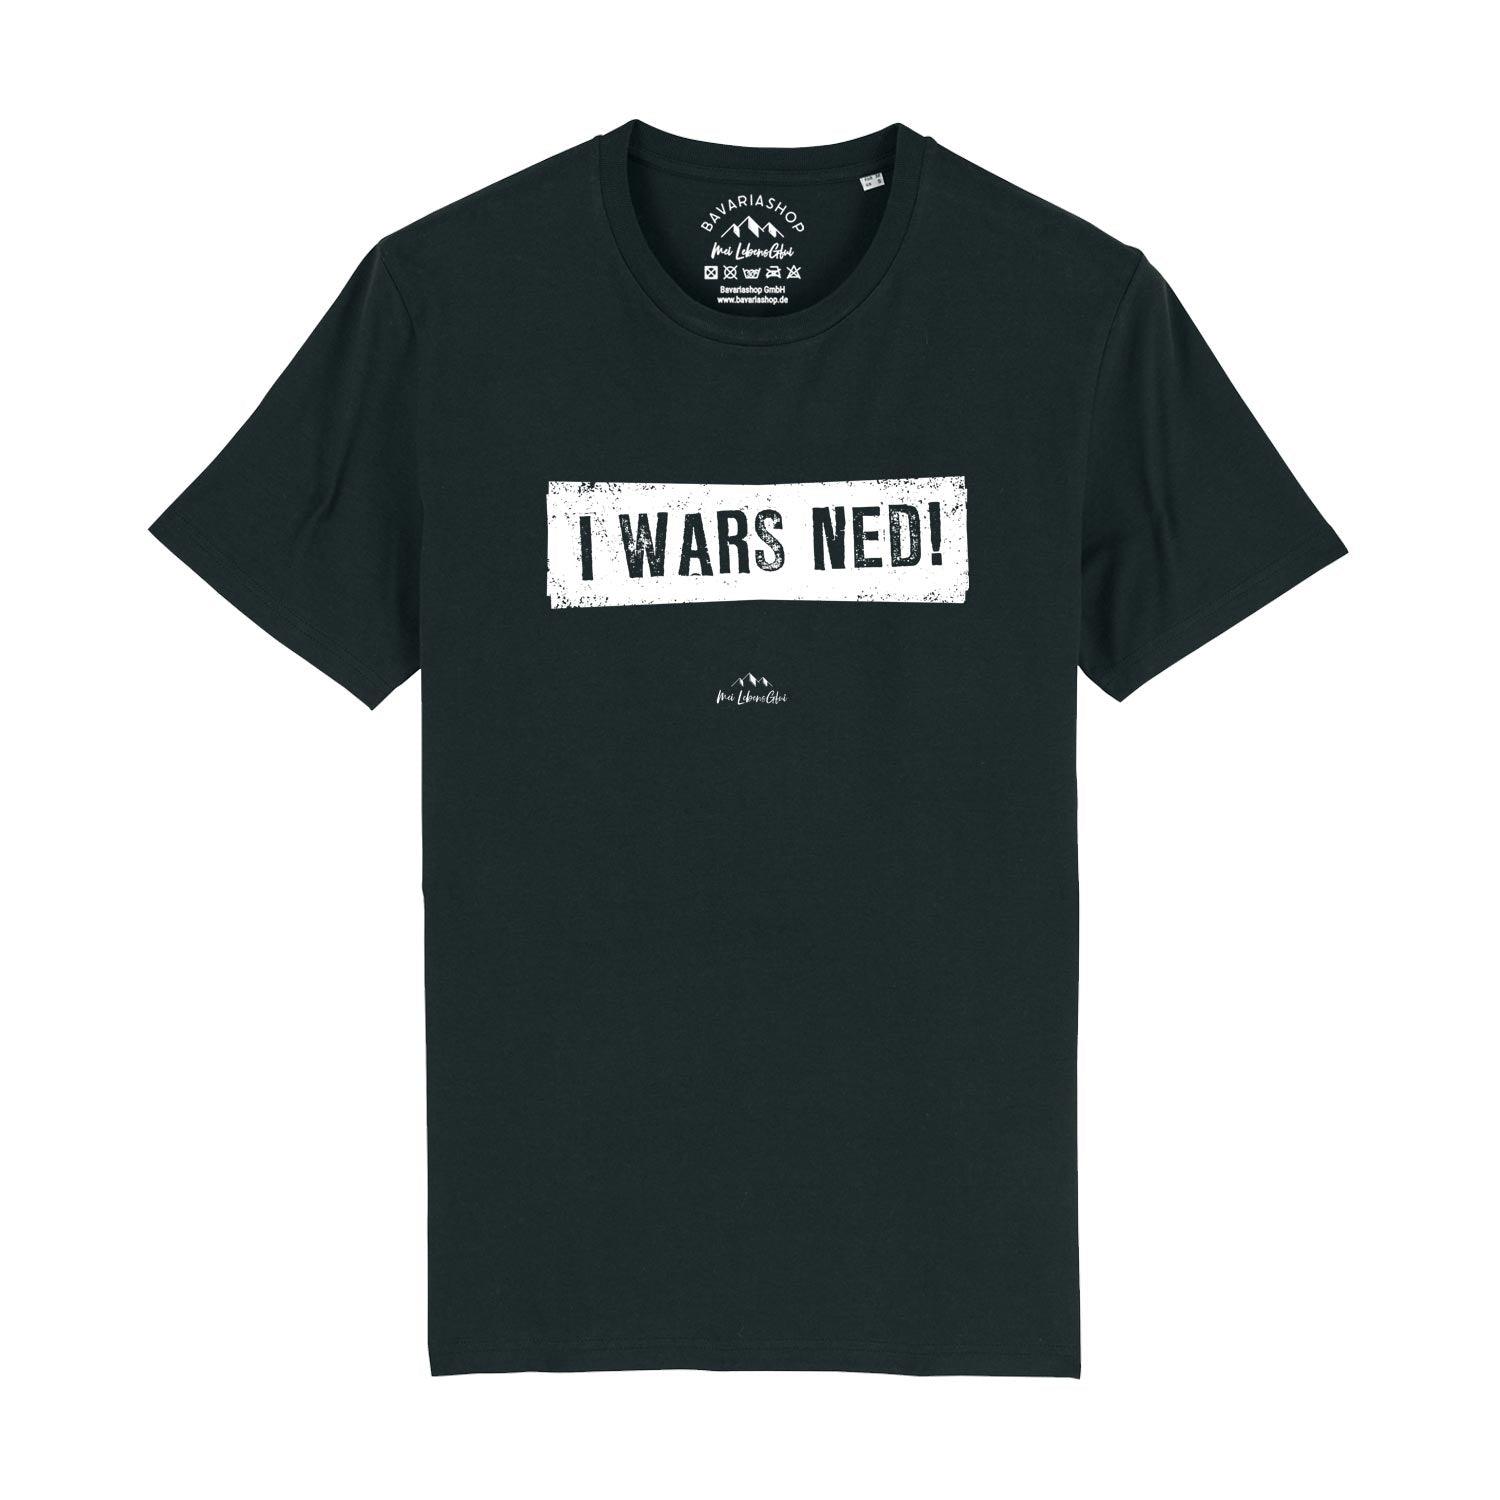 Herren T-Shirt "I wars ned!" - bavariashop - mei LebensGfui